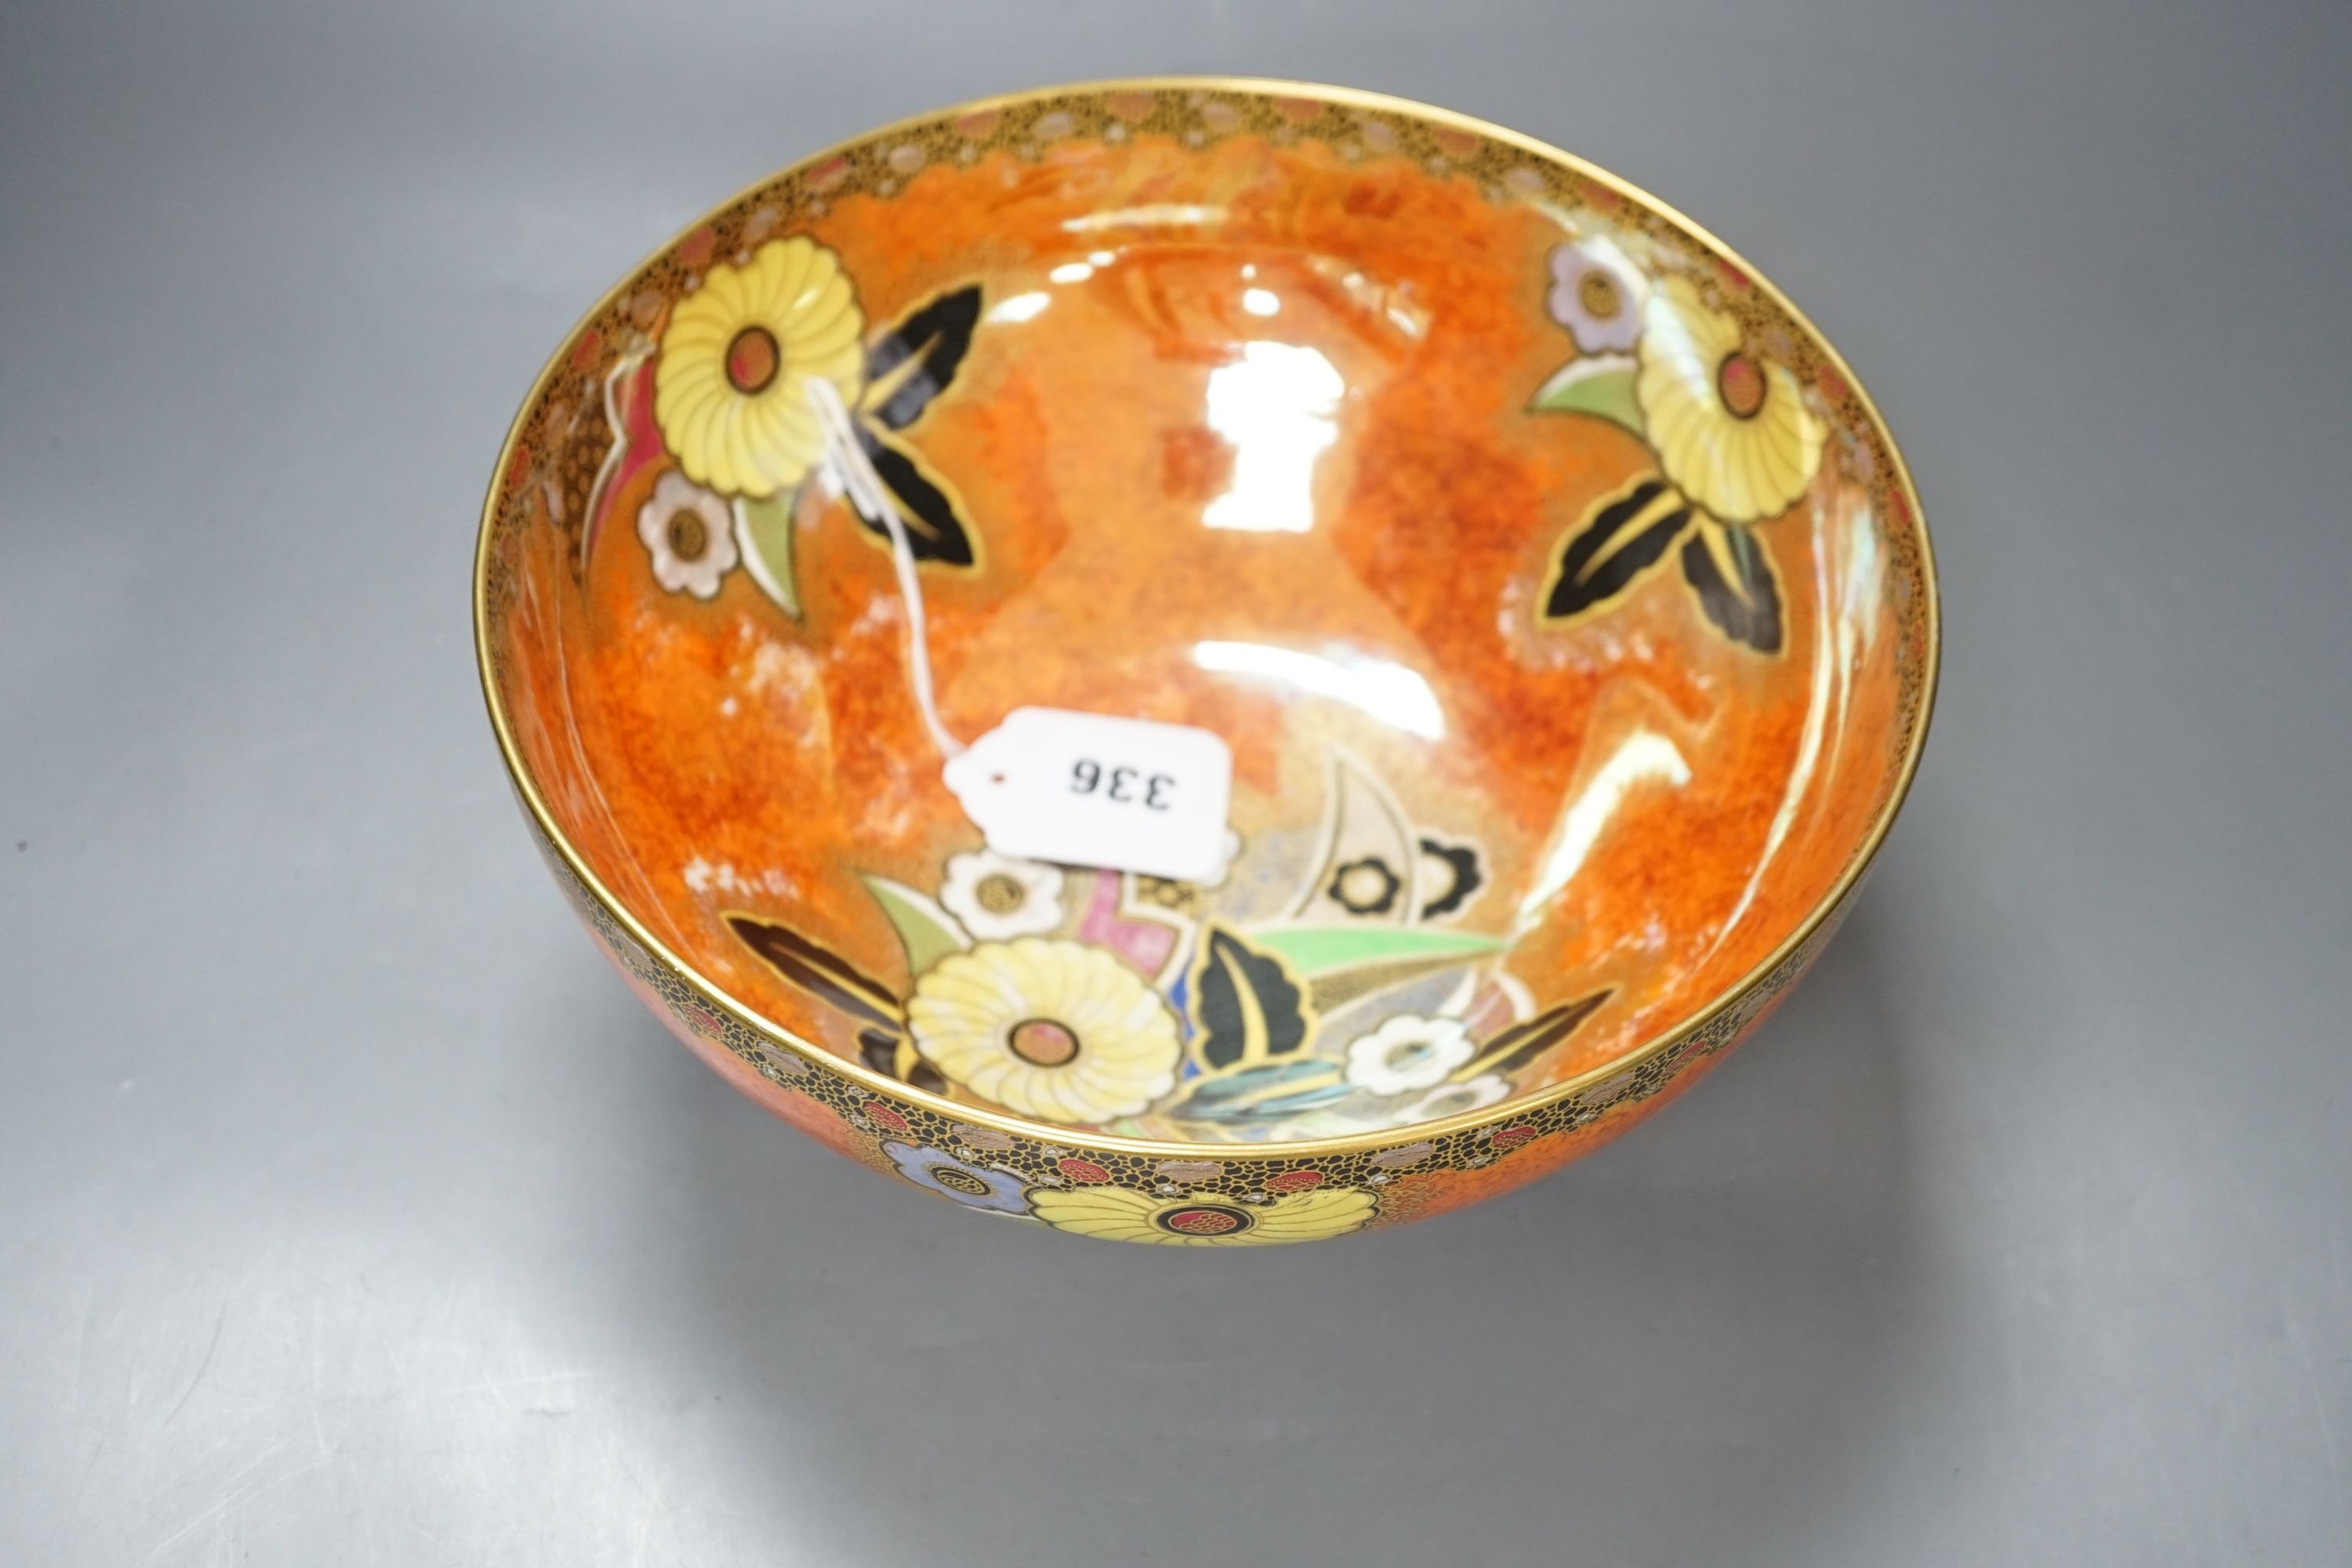 A Carlton ware sunflower lustre bowl, pattern 3334 - 11.5cm tall